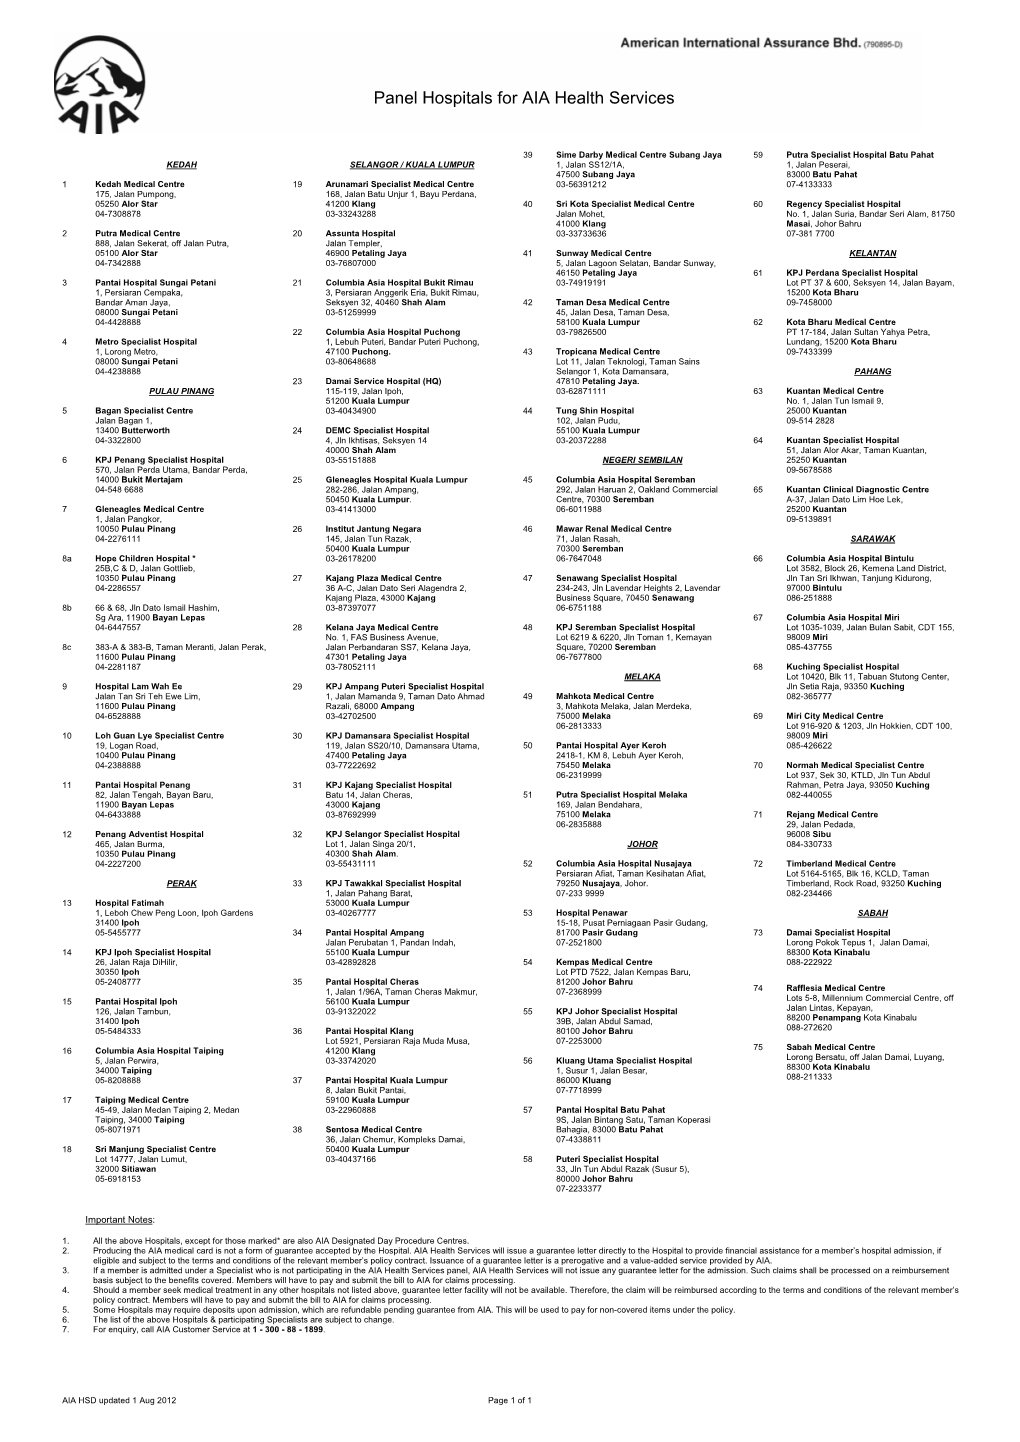 Panel Hospital Listing